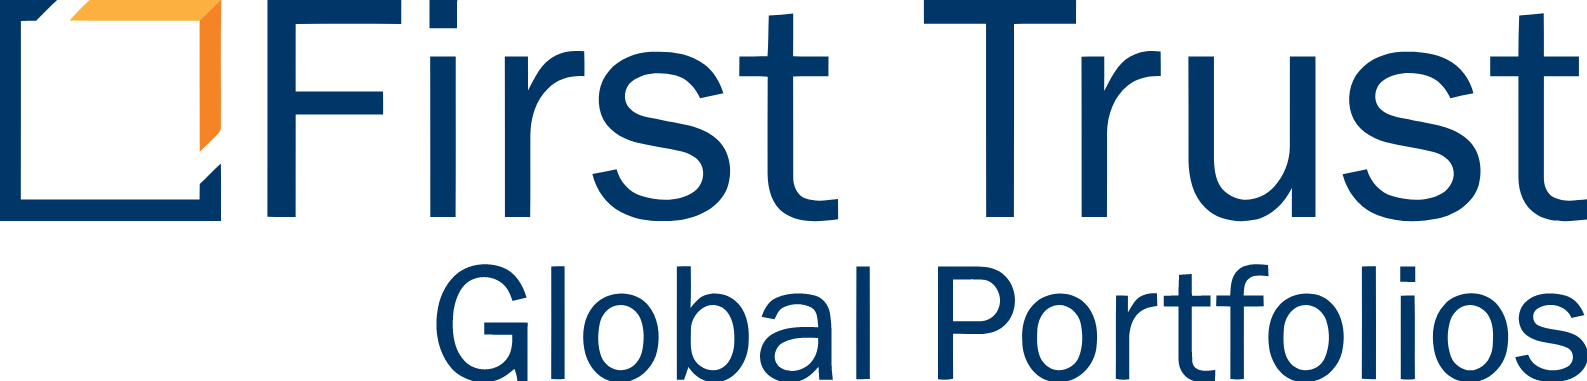 First Trust logo large (transparent PNG)